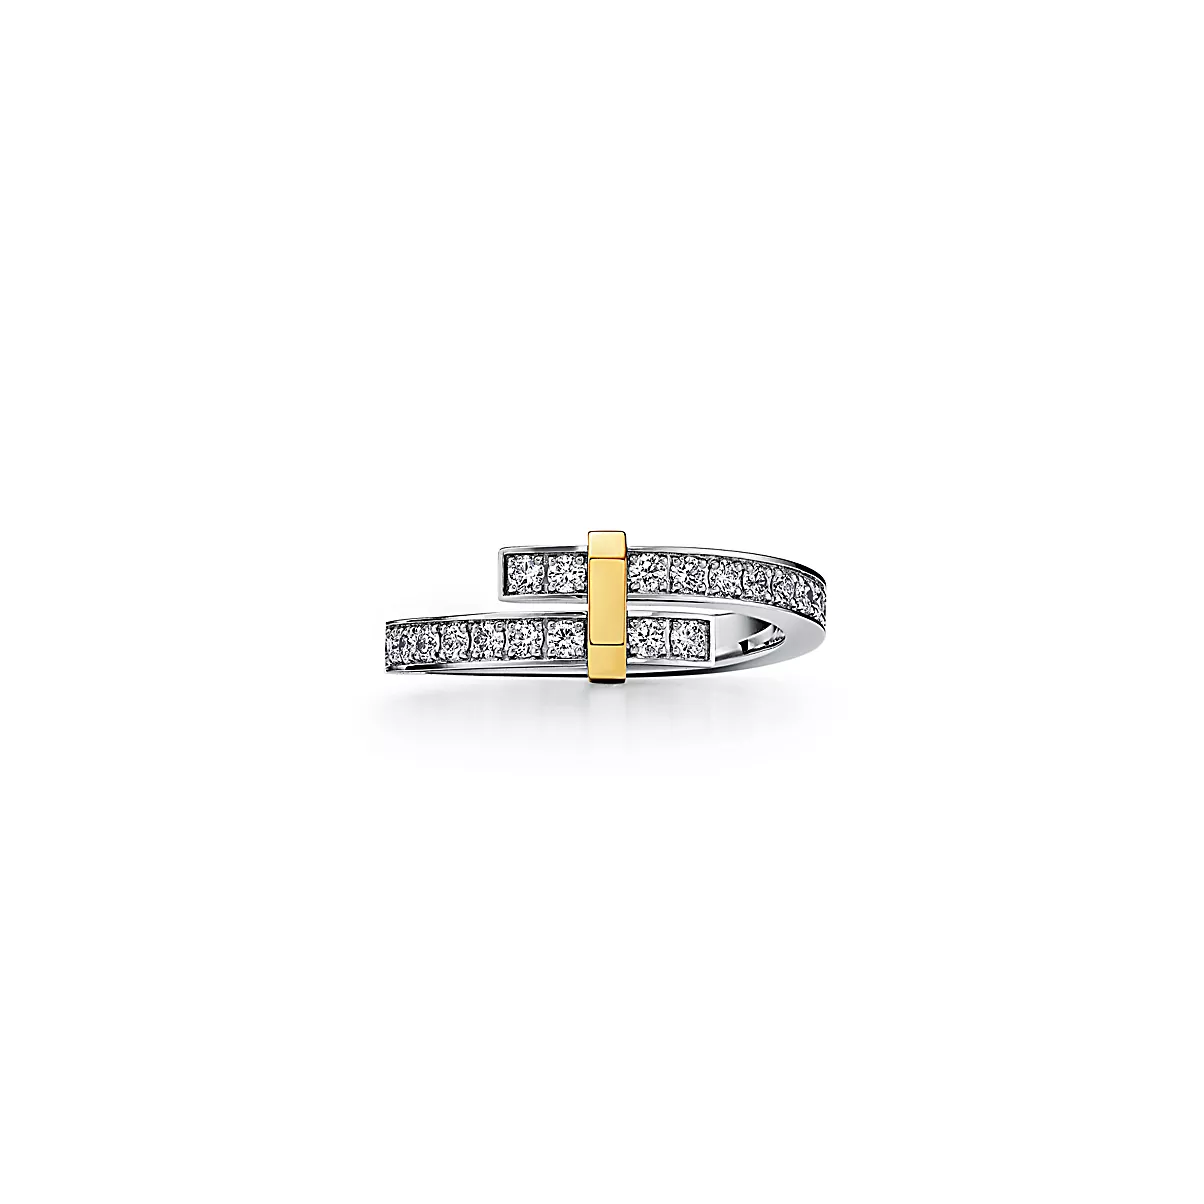 Tiffany Edge Ring 플래티늄 및 18K 옐로우 골드 라운드 브릴리언트 다이아몬드